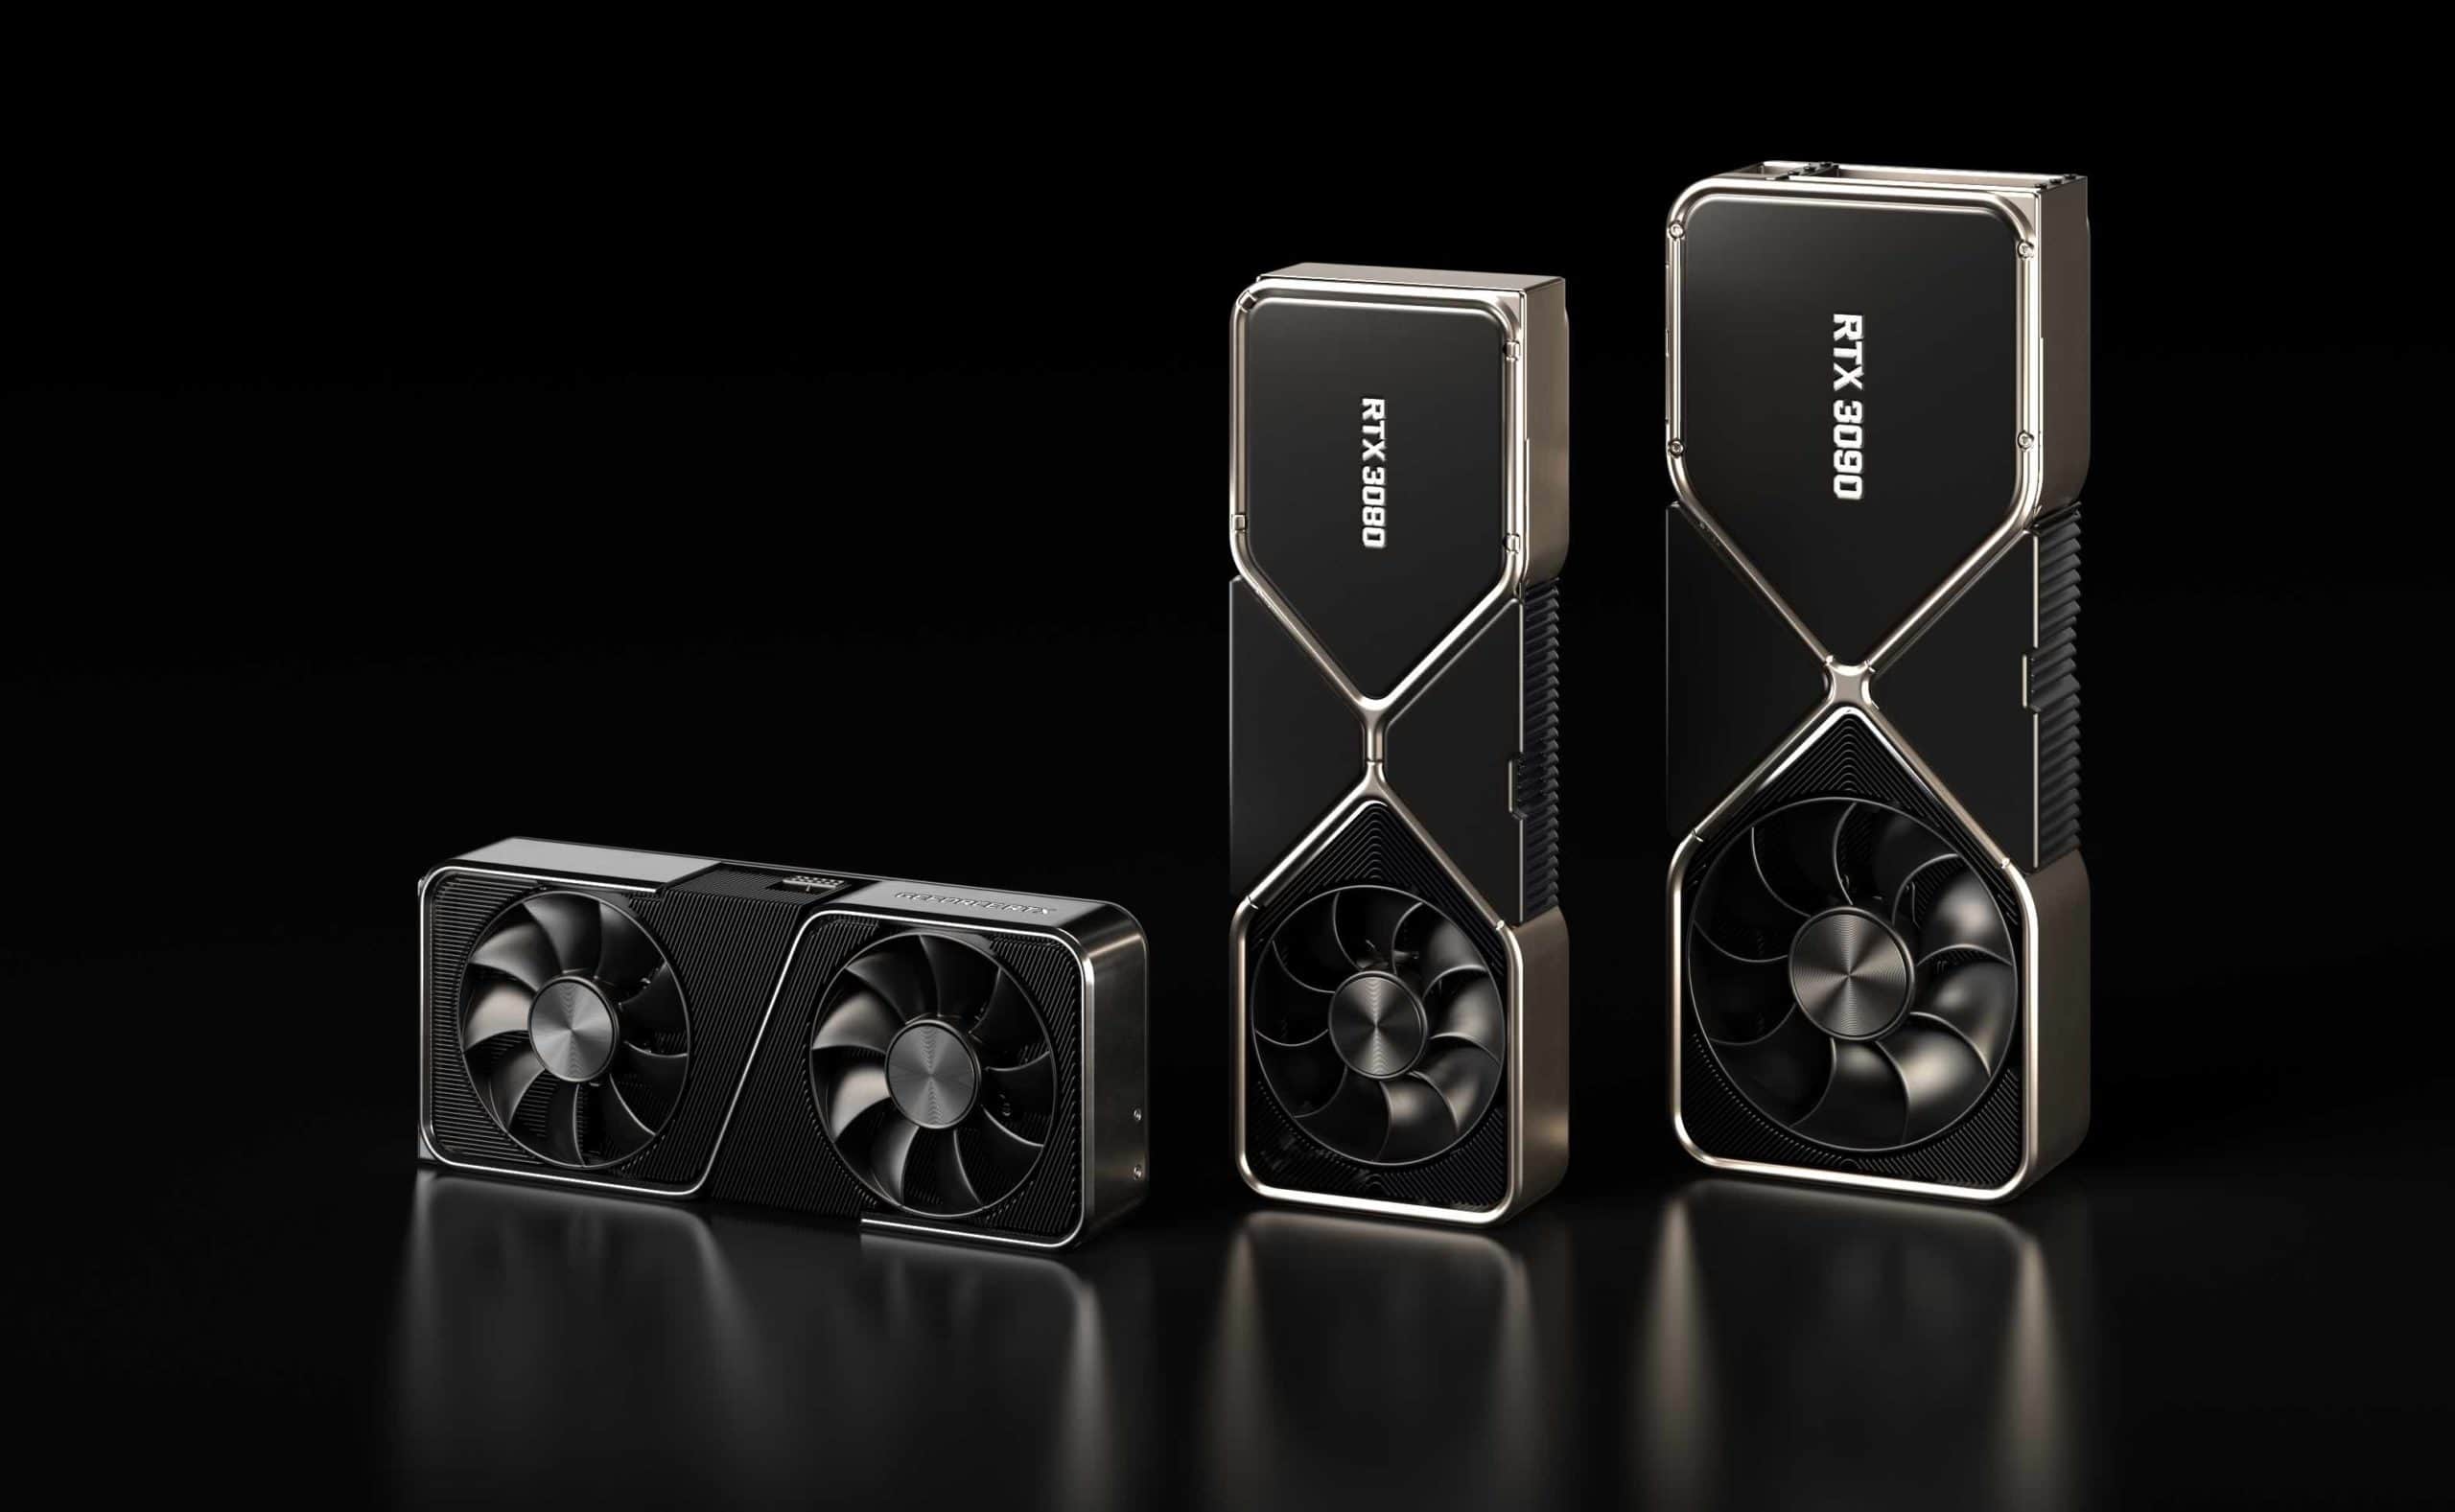 Nvidia announces the new RTX 30 Series